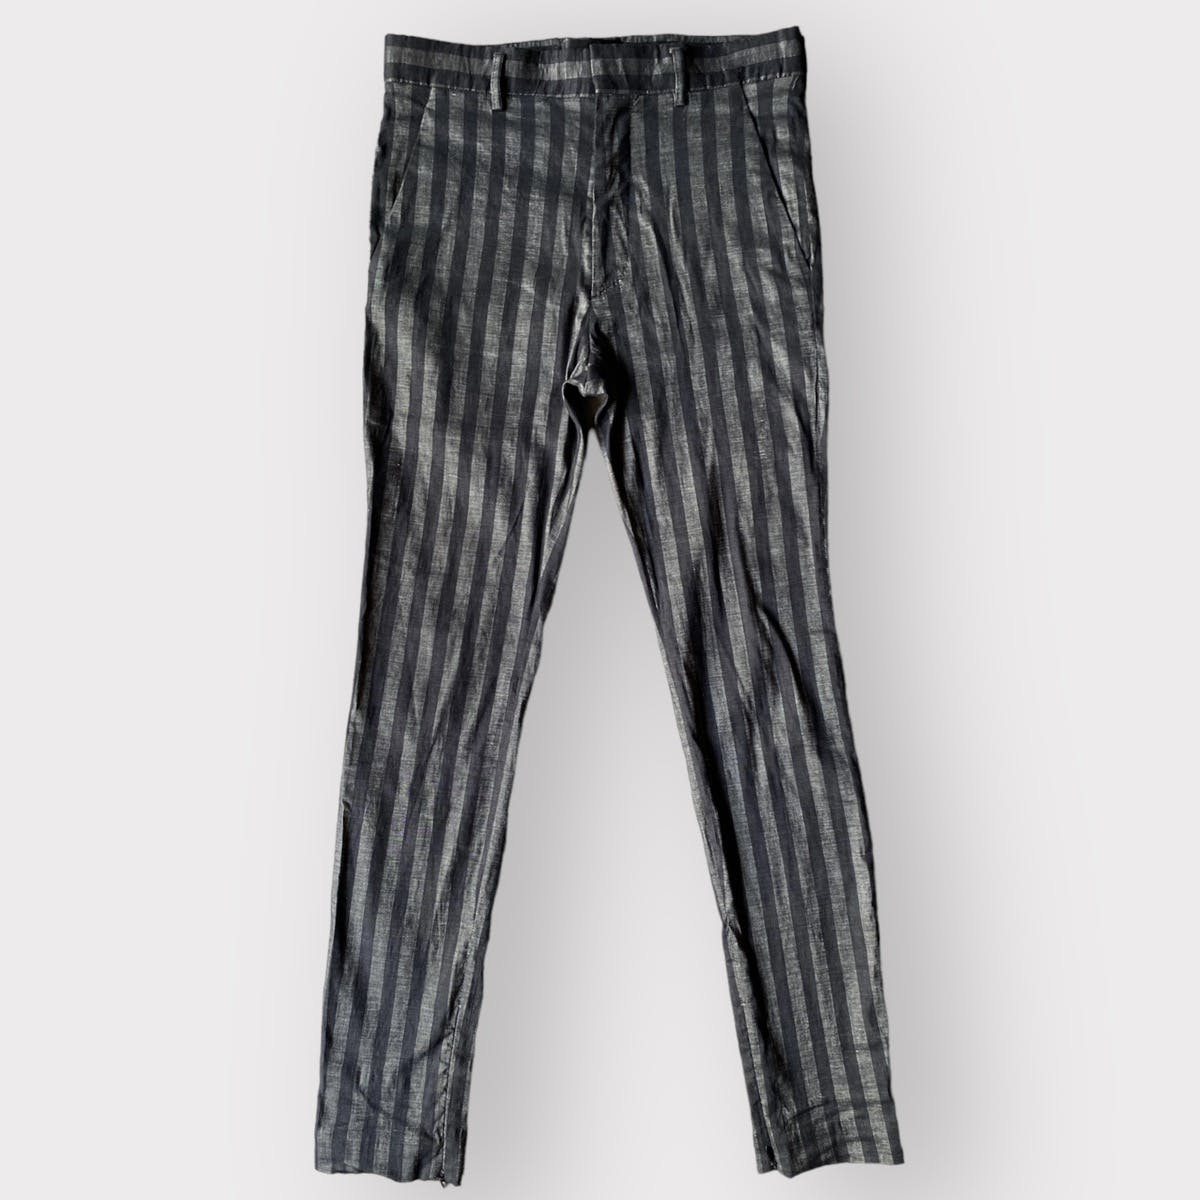 SS15 Stretch Cotton/Linen Skinny Pants - 2